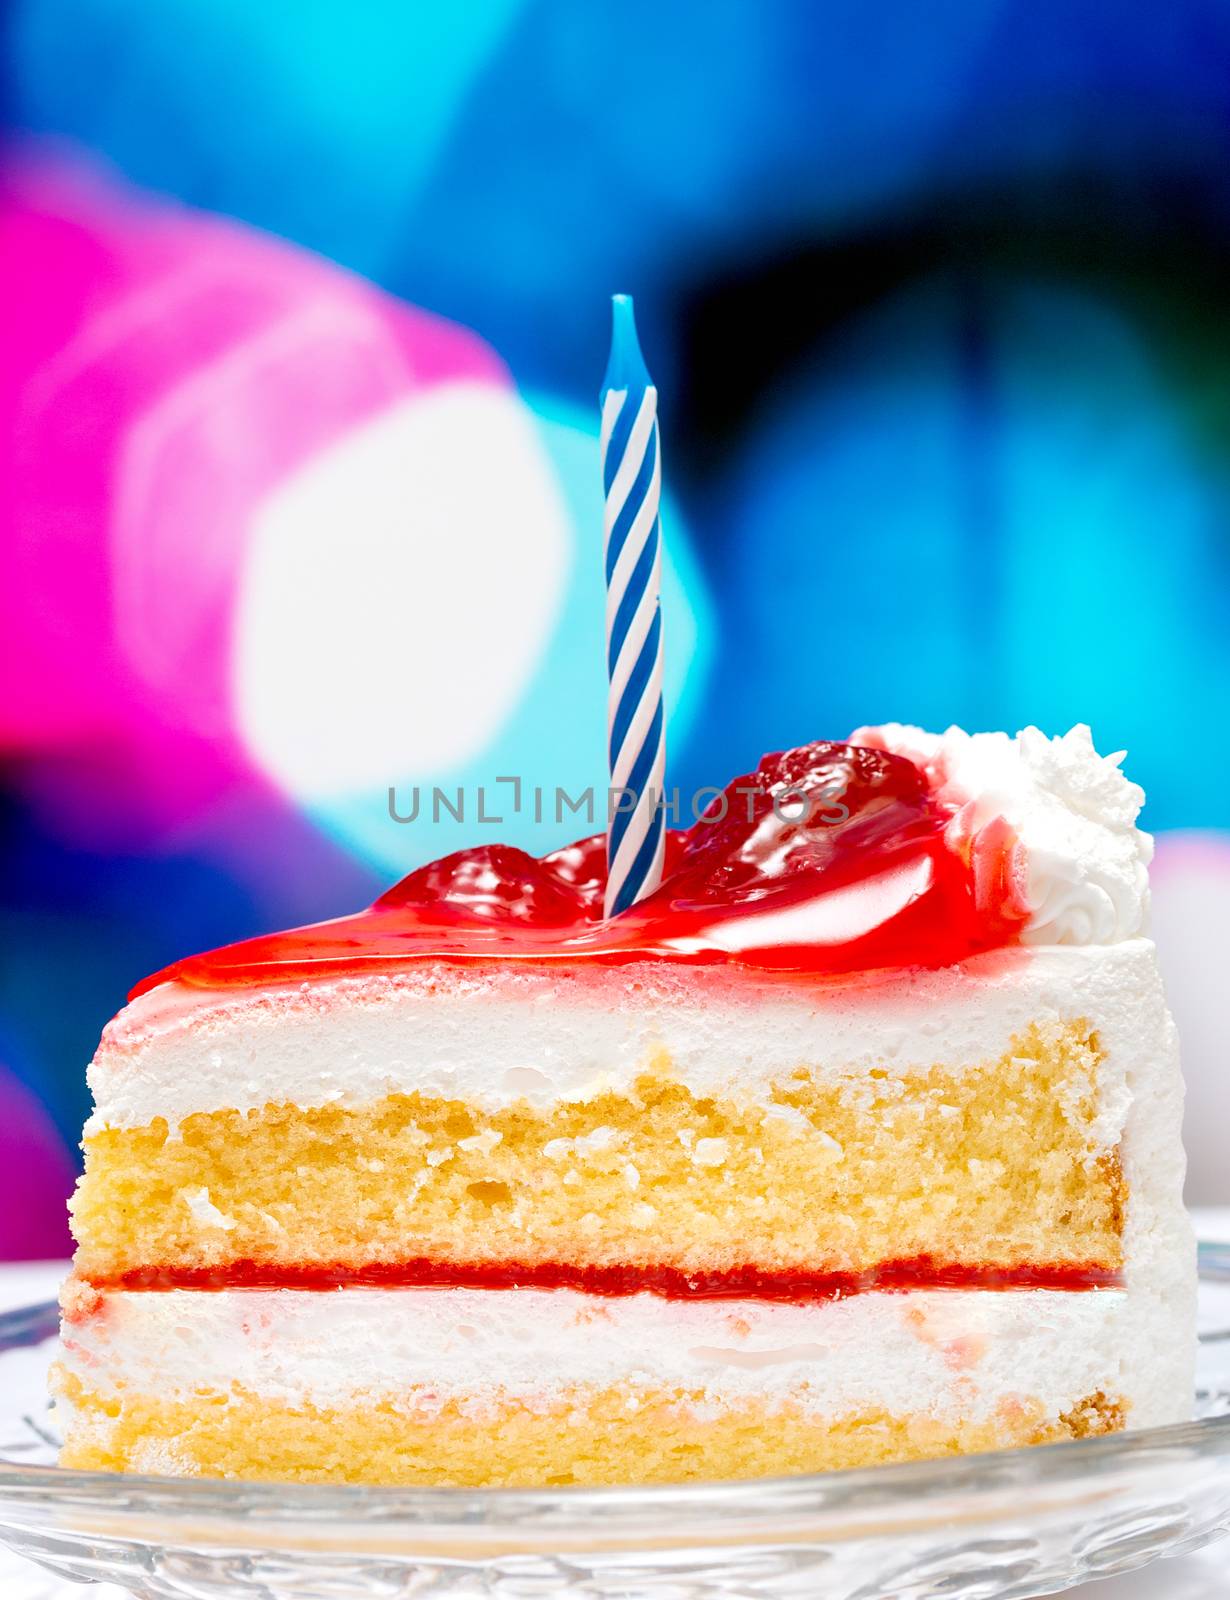 Strawberry Birthday Cake Representing Piece Birthdays And Celebration